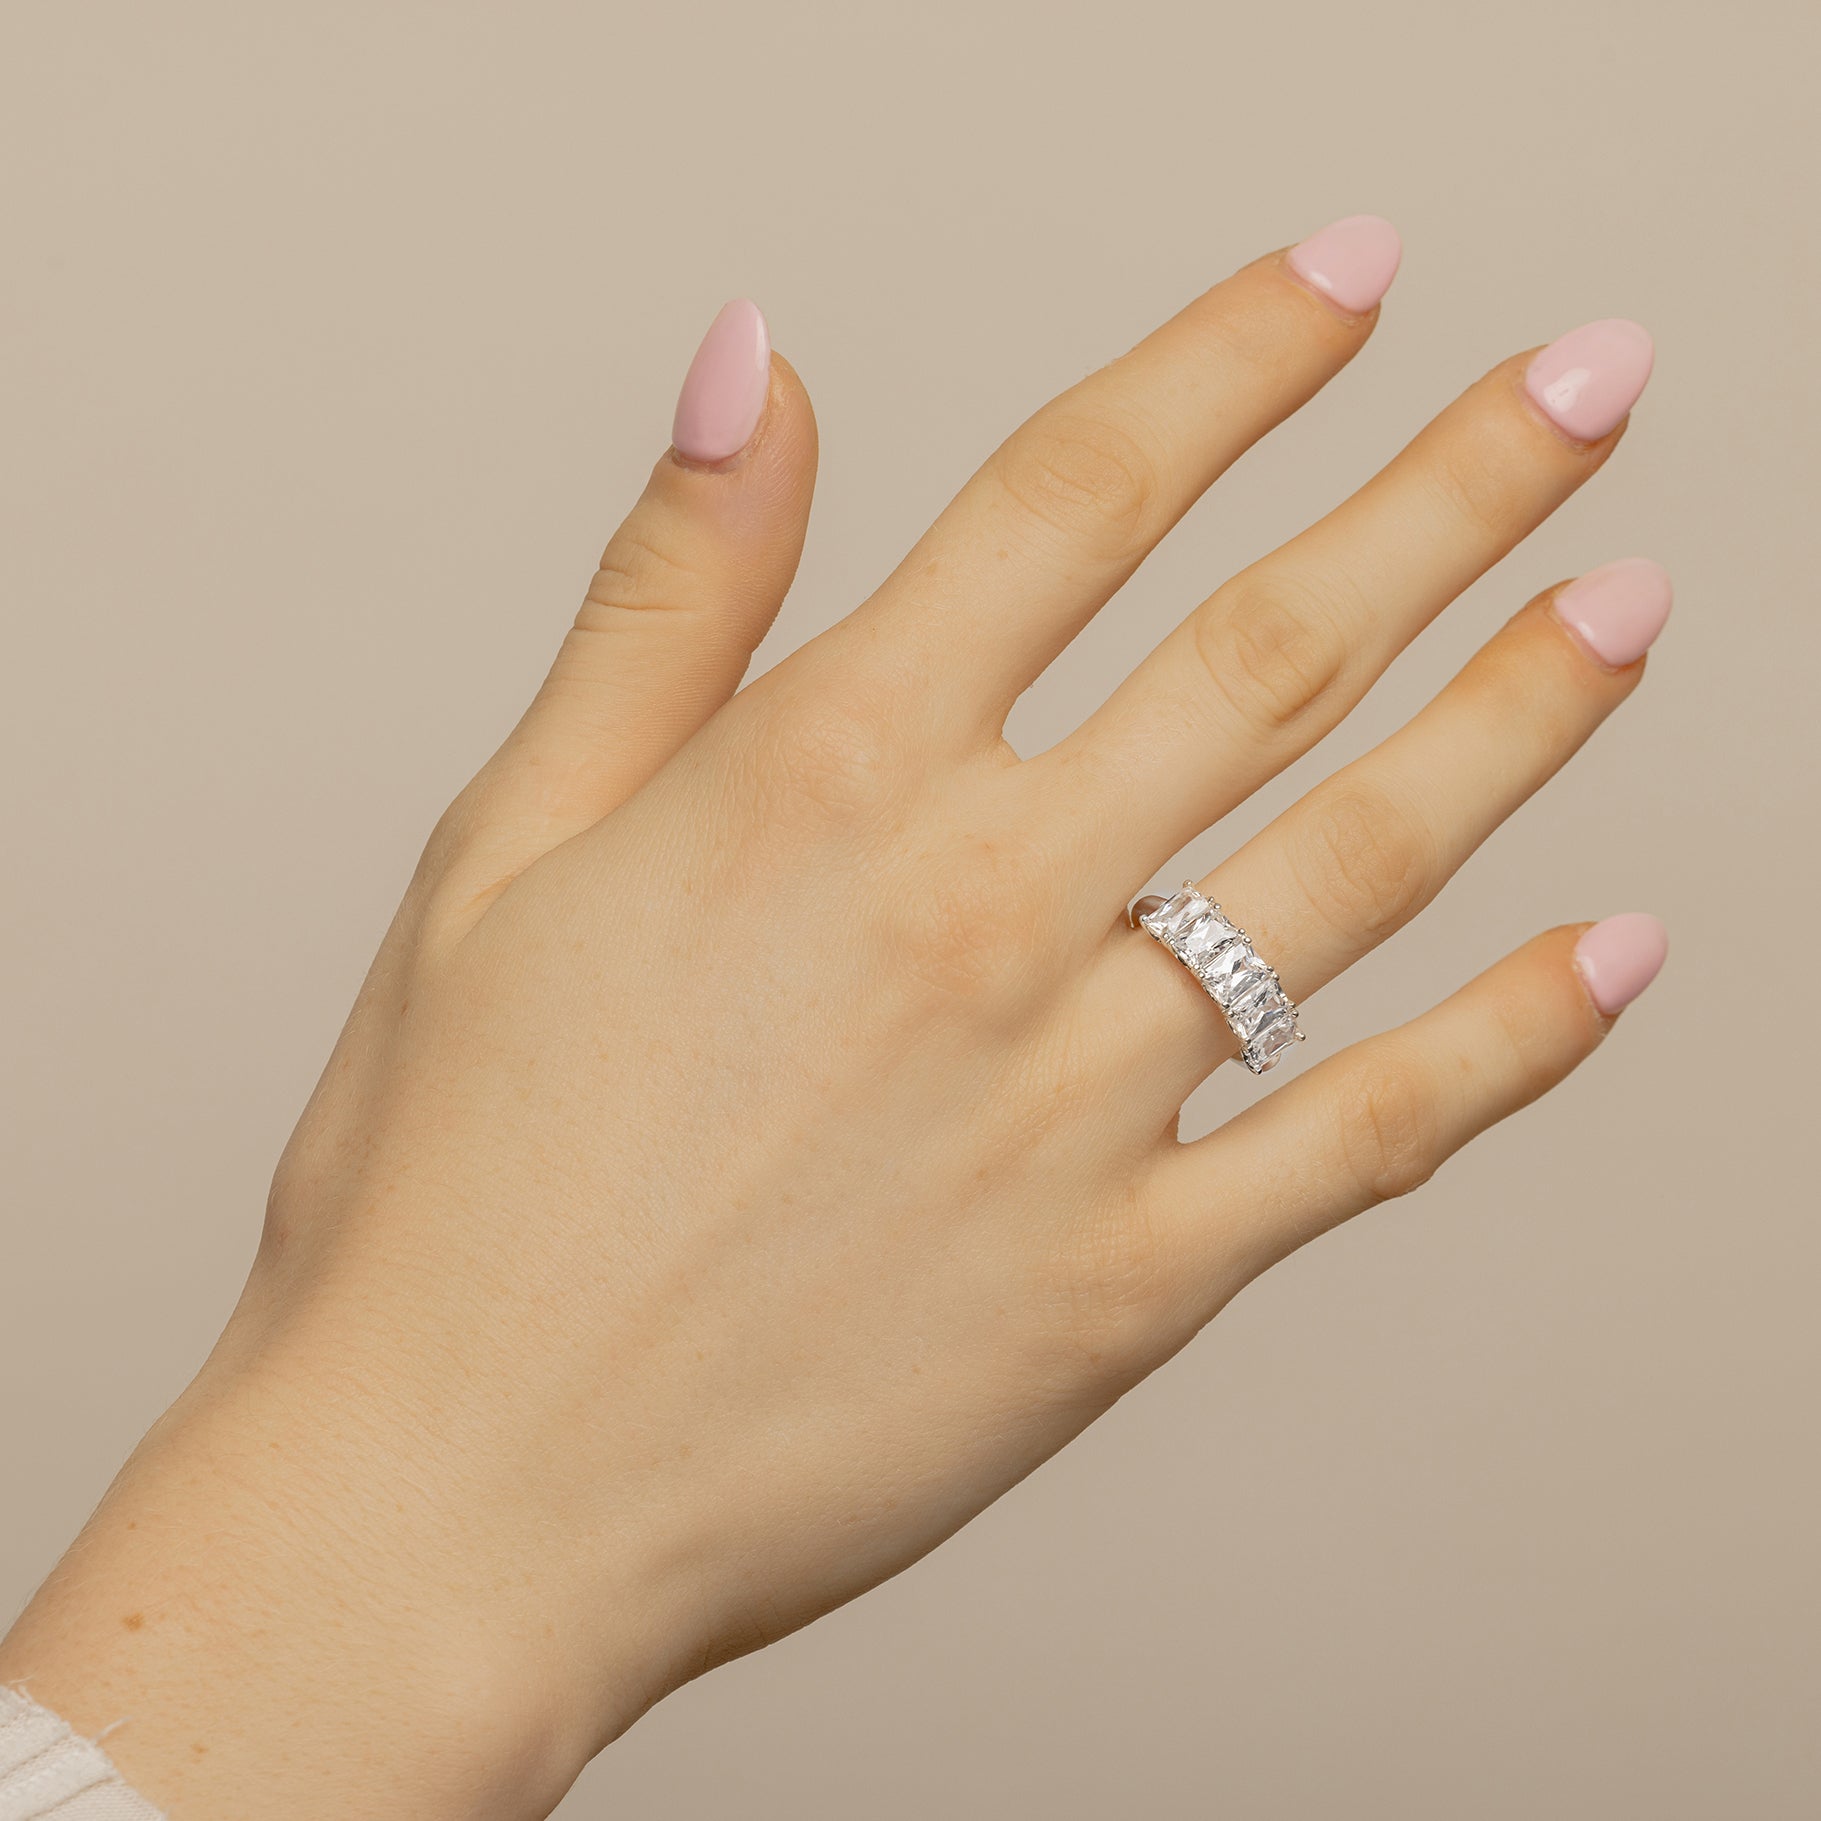 Lab-created Five Stone Diamond Ring